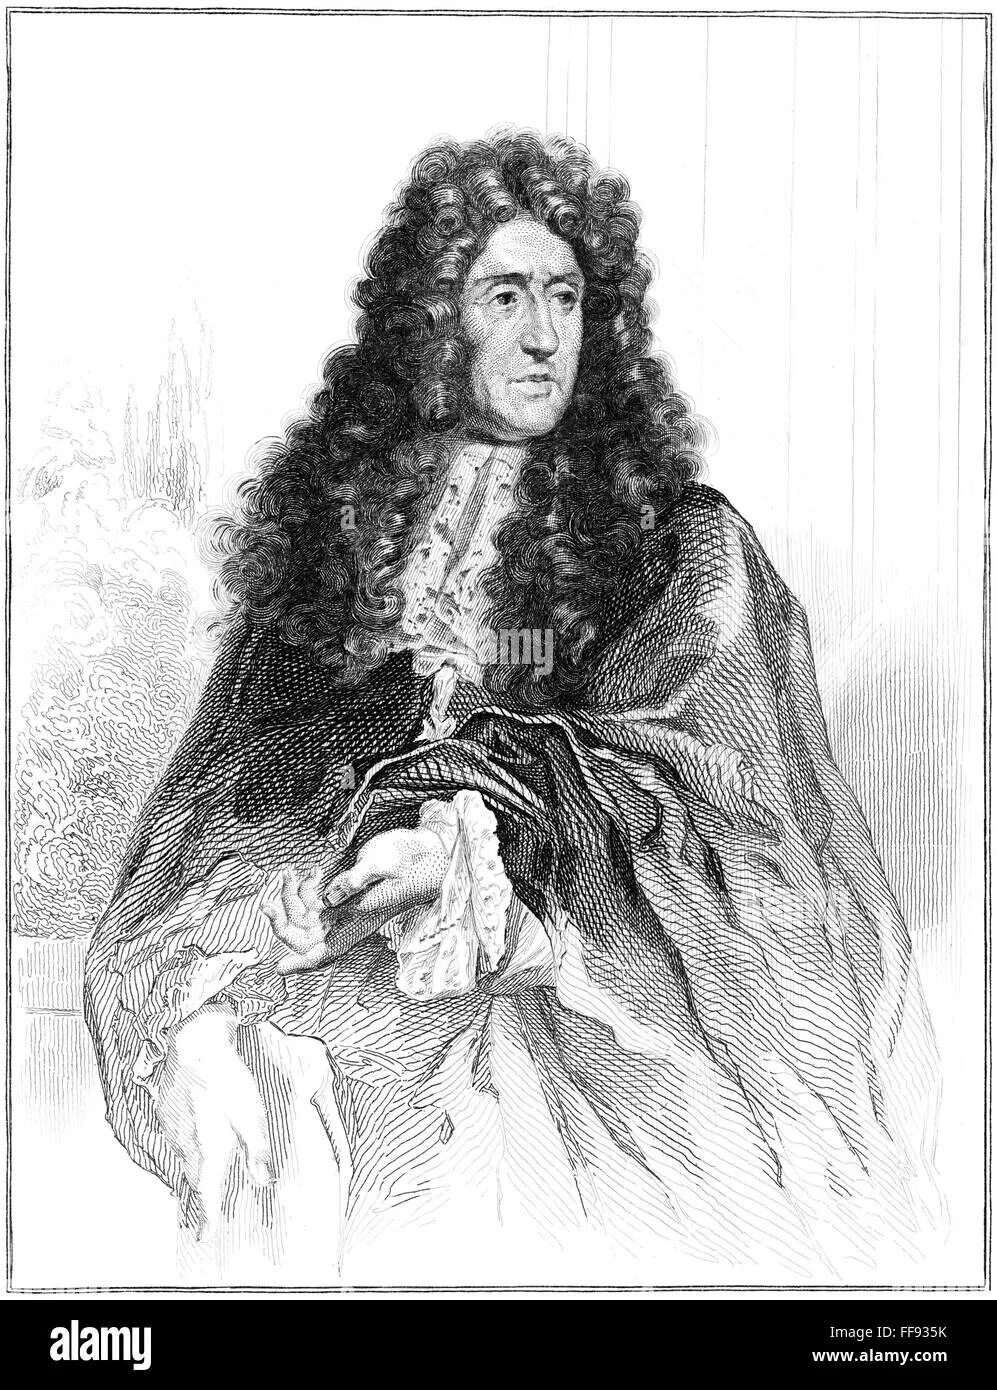 Андре ле. Андре Ленотр (1613—1700). Андре Ленотр Архитектор. Портрет Андре Ленотра.